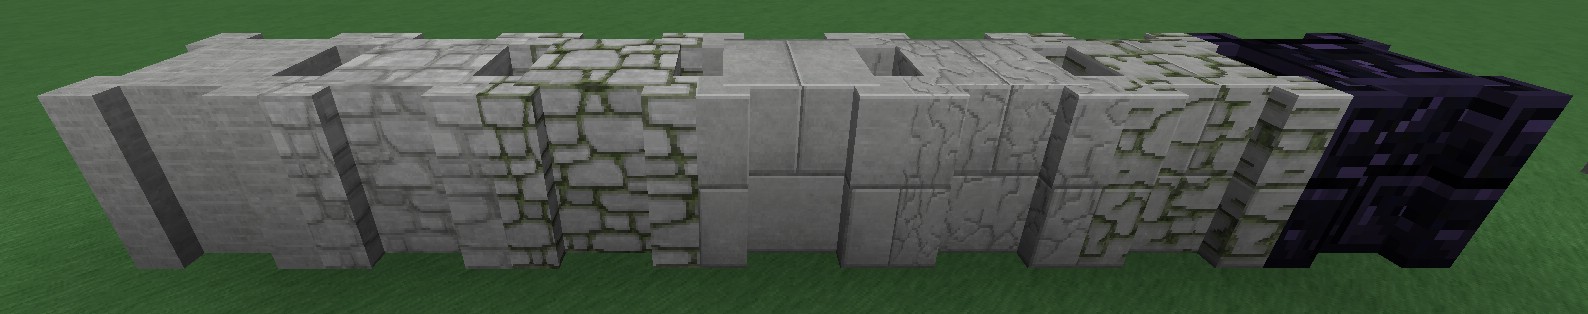 Dungeons-blocks-mod-12.jpg